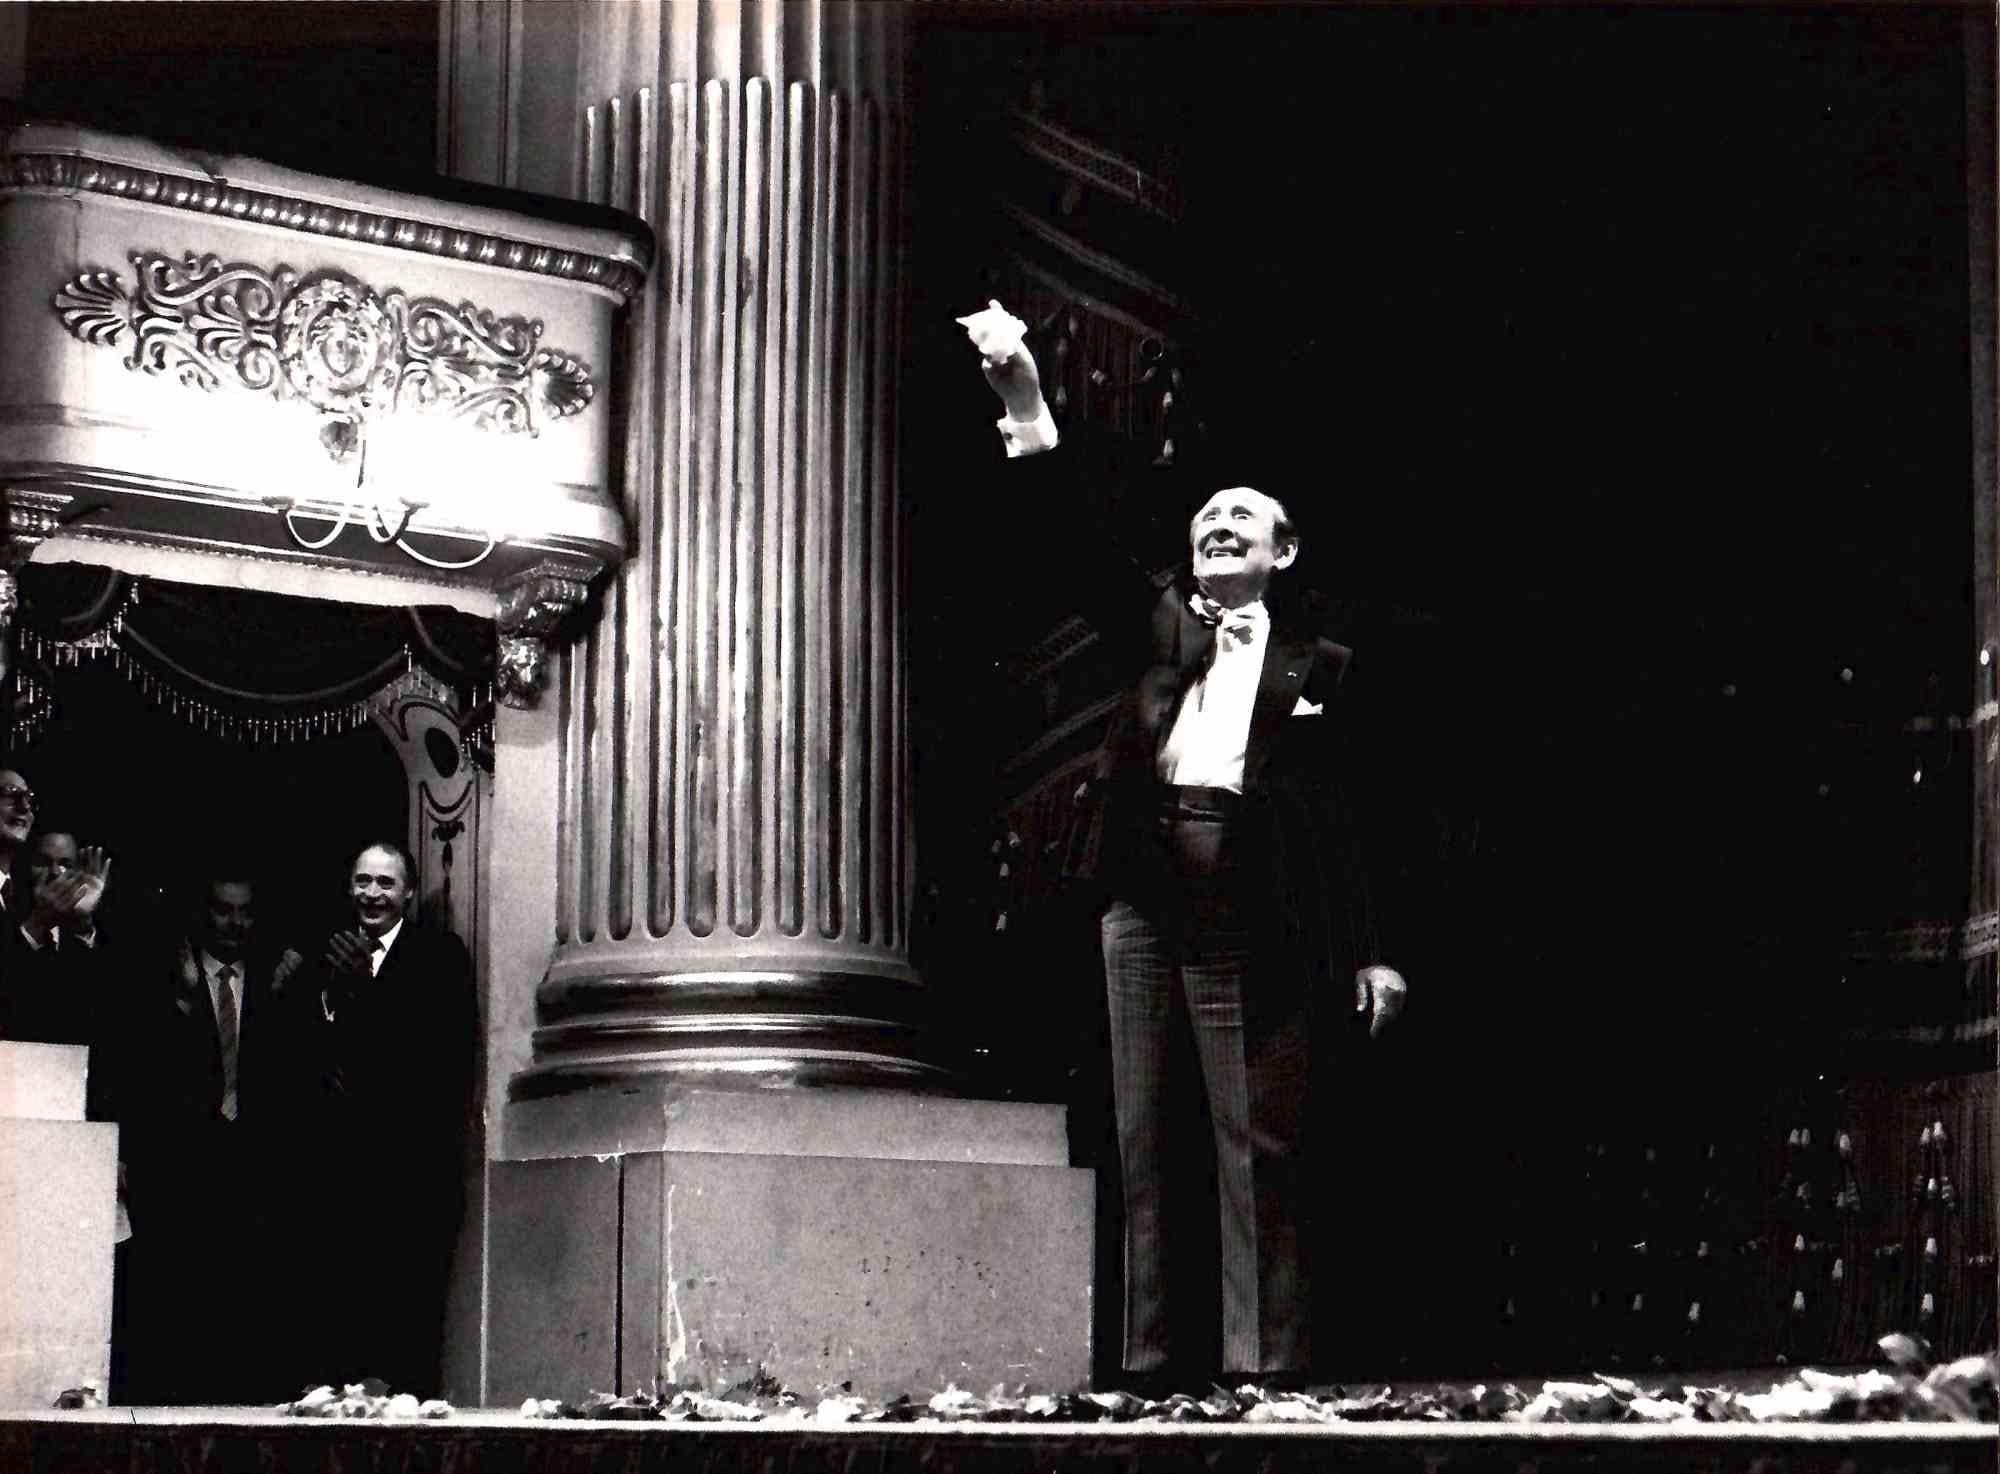 Unknown Black and White Photograph - Concert of Vladimir Horowitz - Vintage B/W photo - 1985